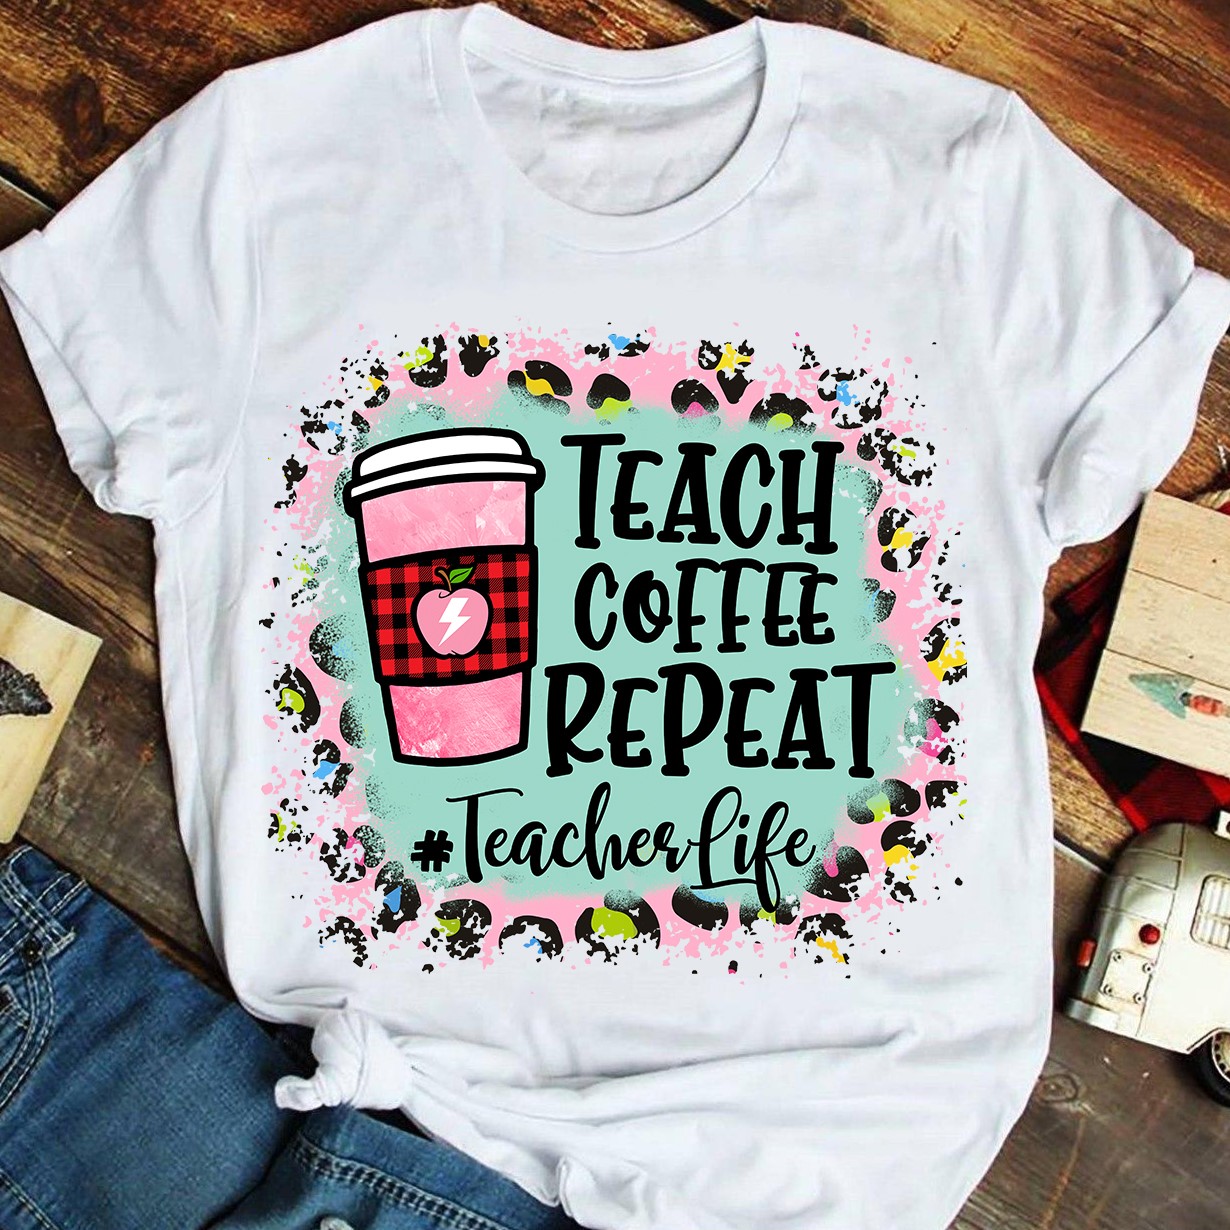 Teach coffee repeat - teacher life